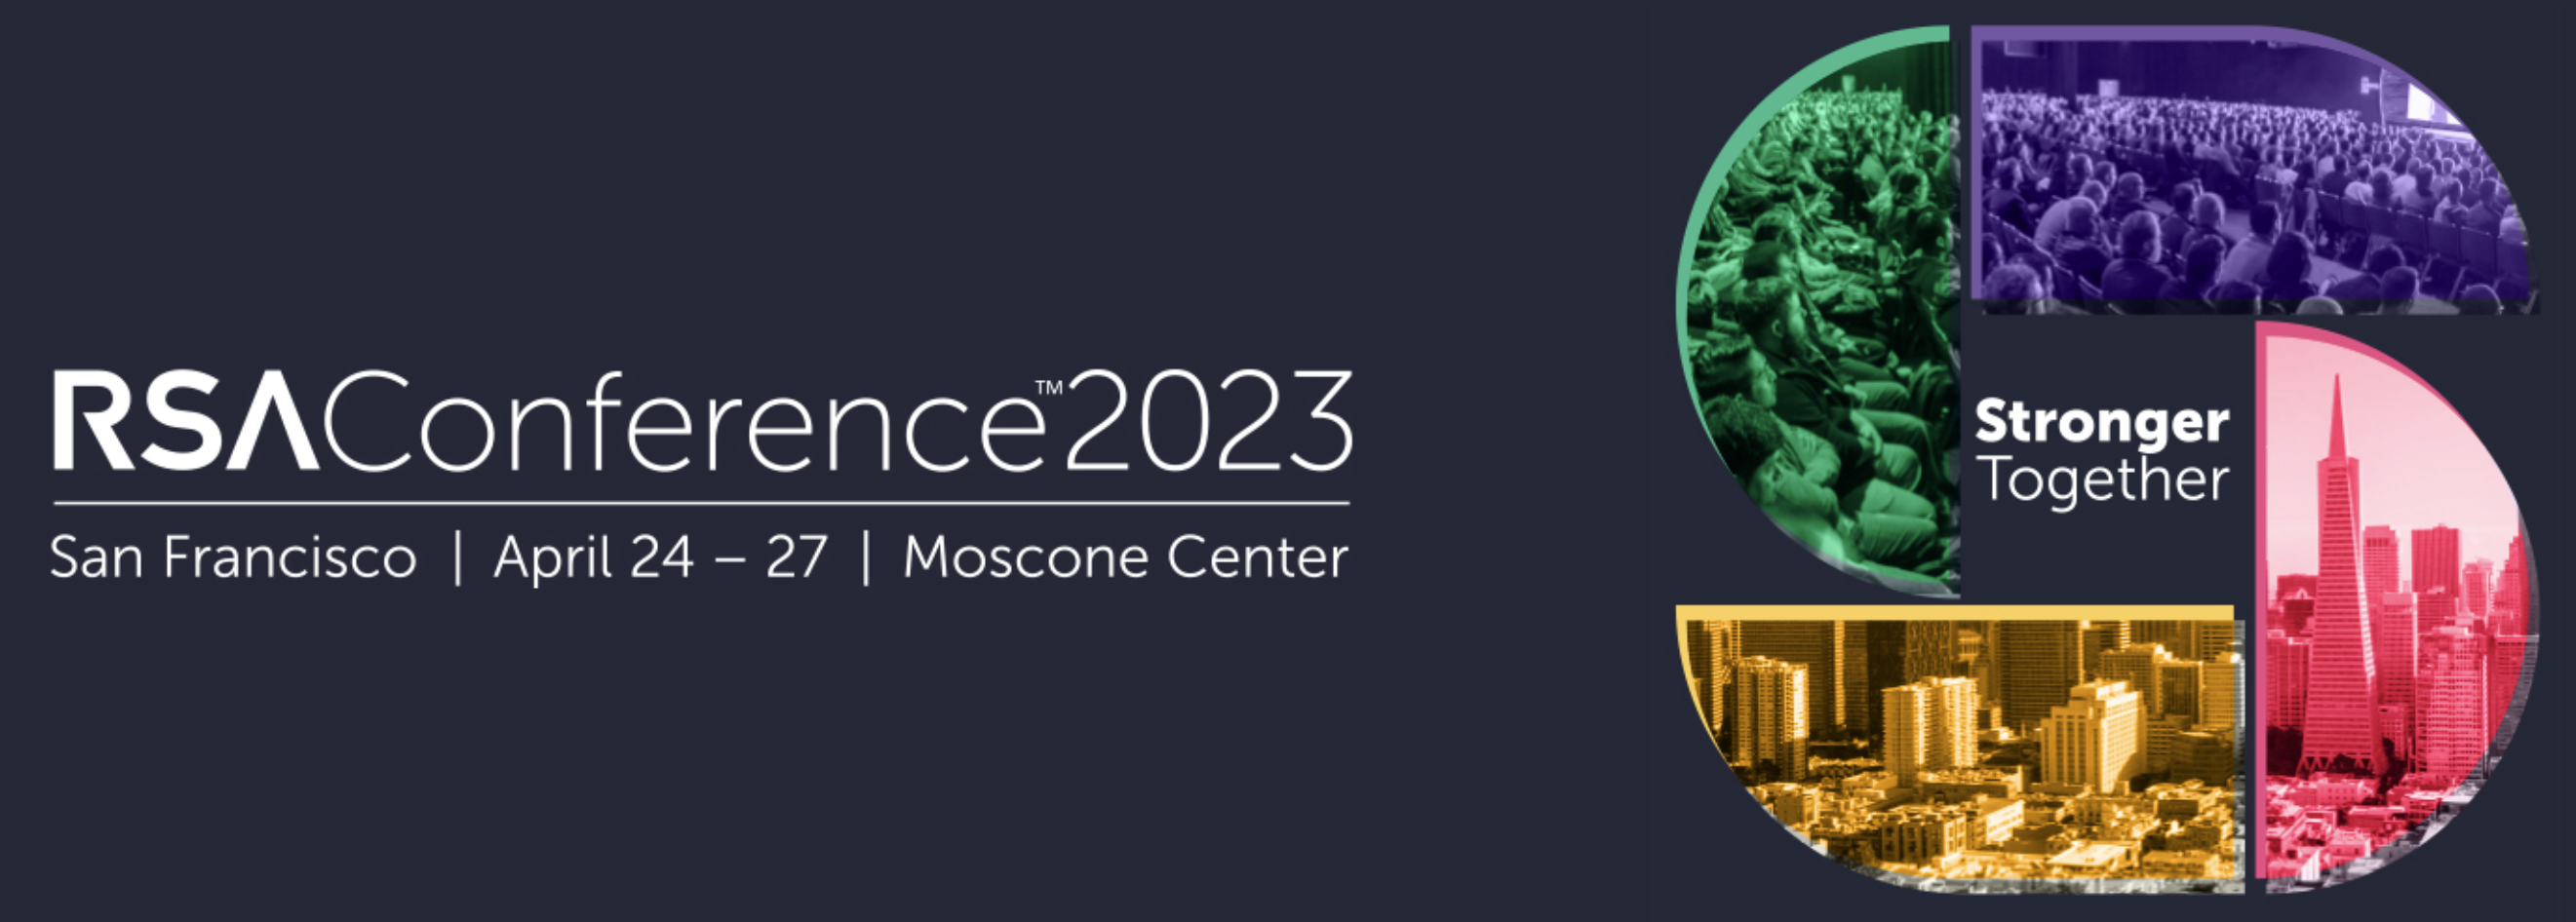 RSA Conference 2023